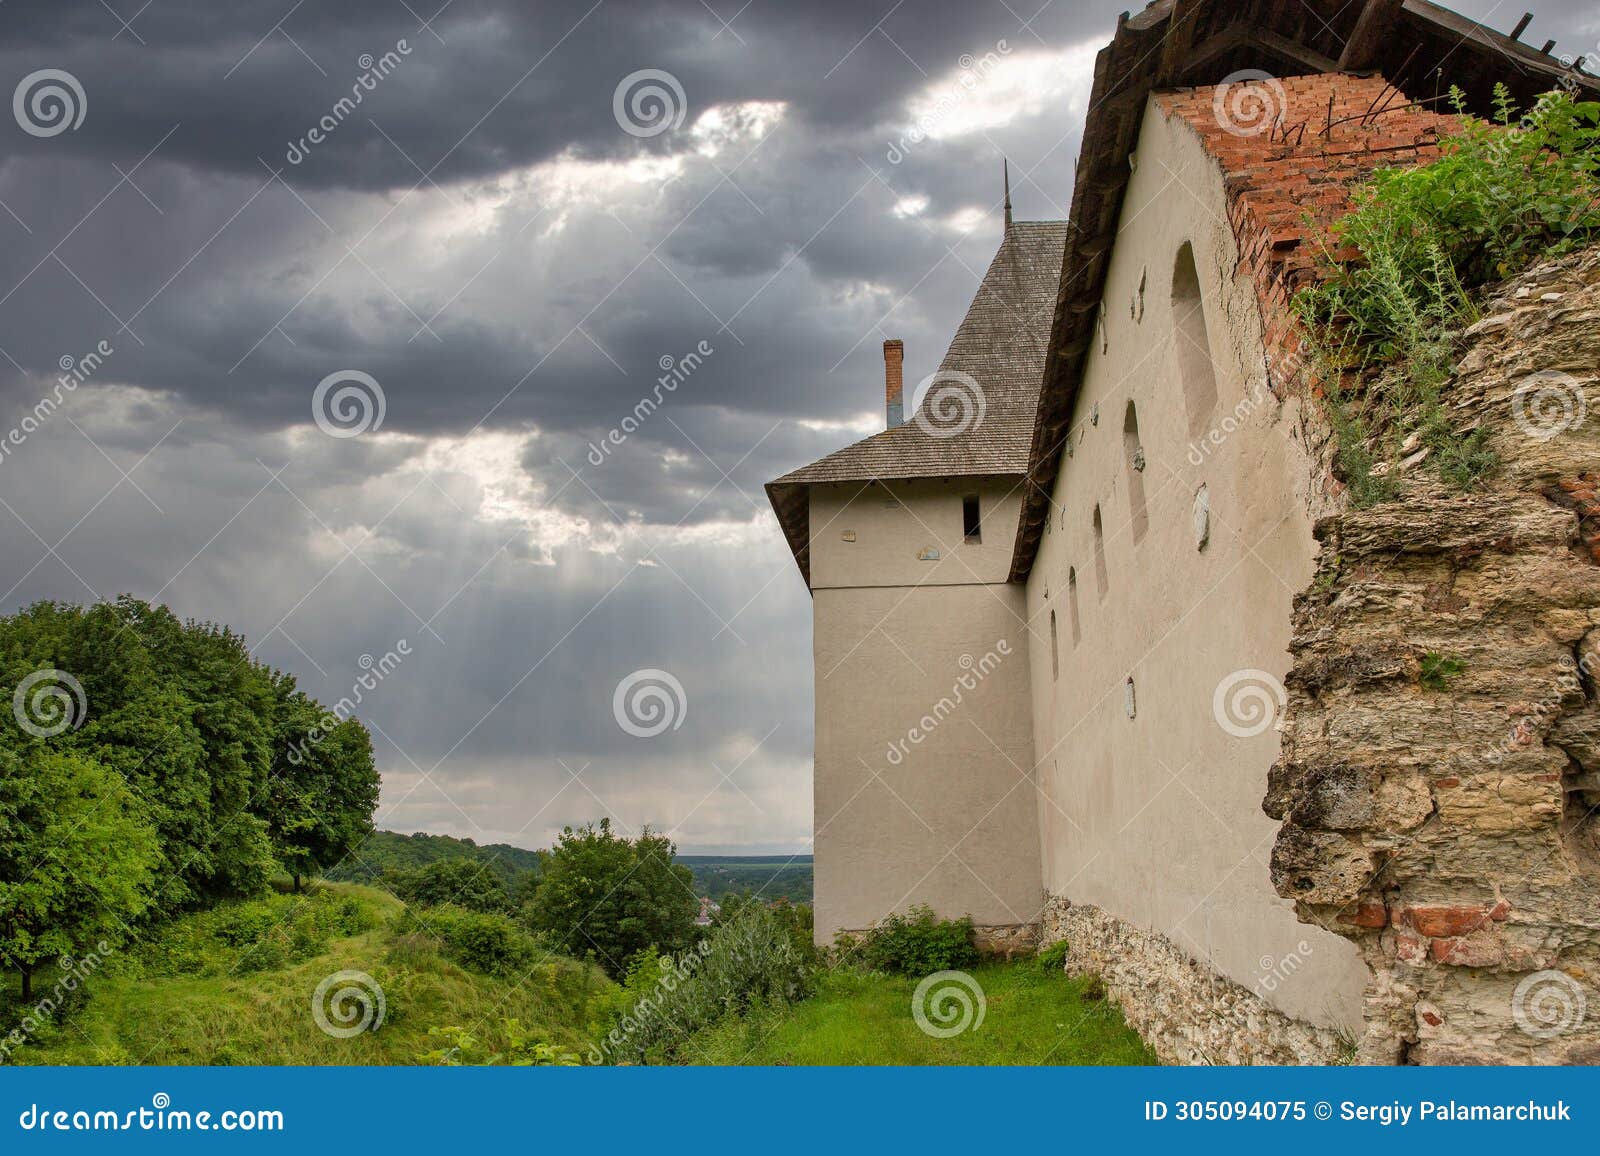 medieval halych castle under stormy sky in ukraine